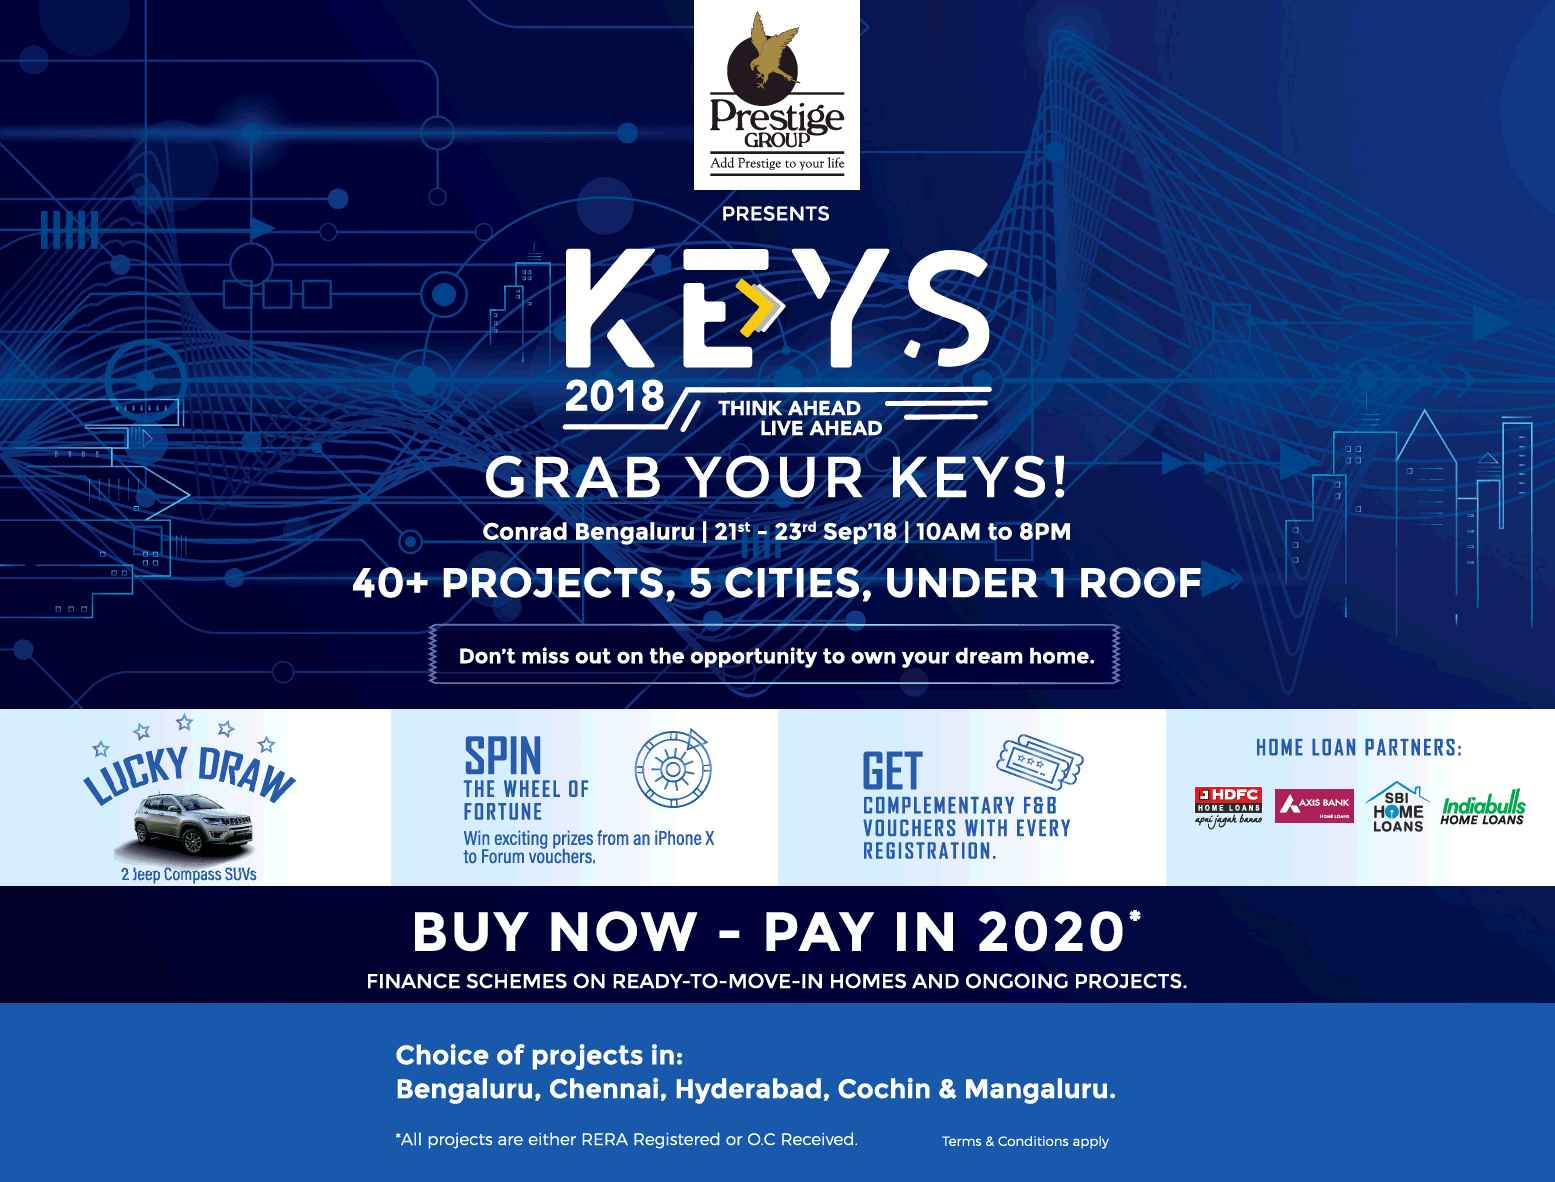 Prestige Group presents Keys 2018 in Bengaluru Update